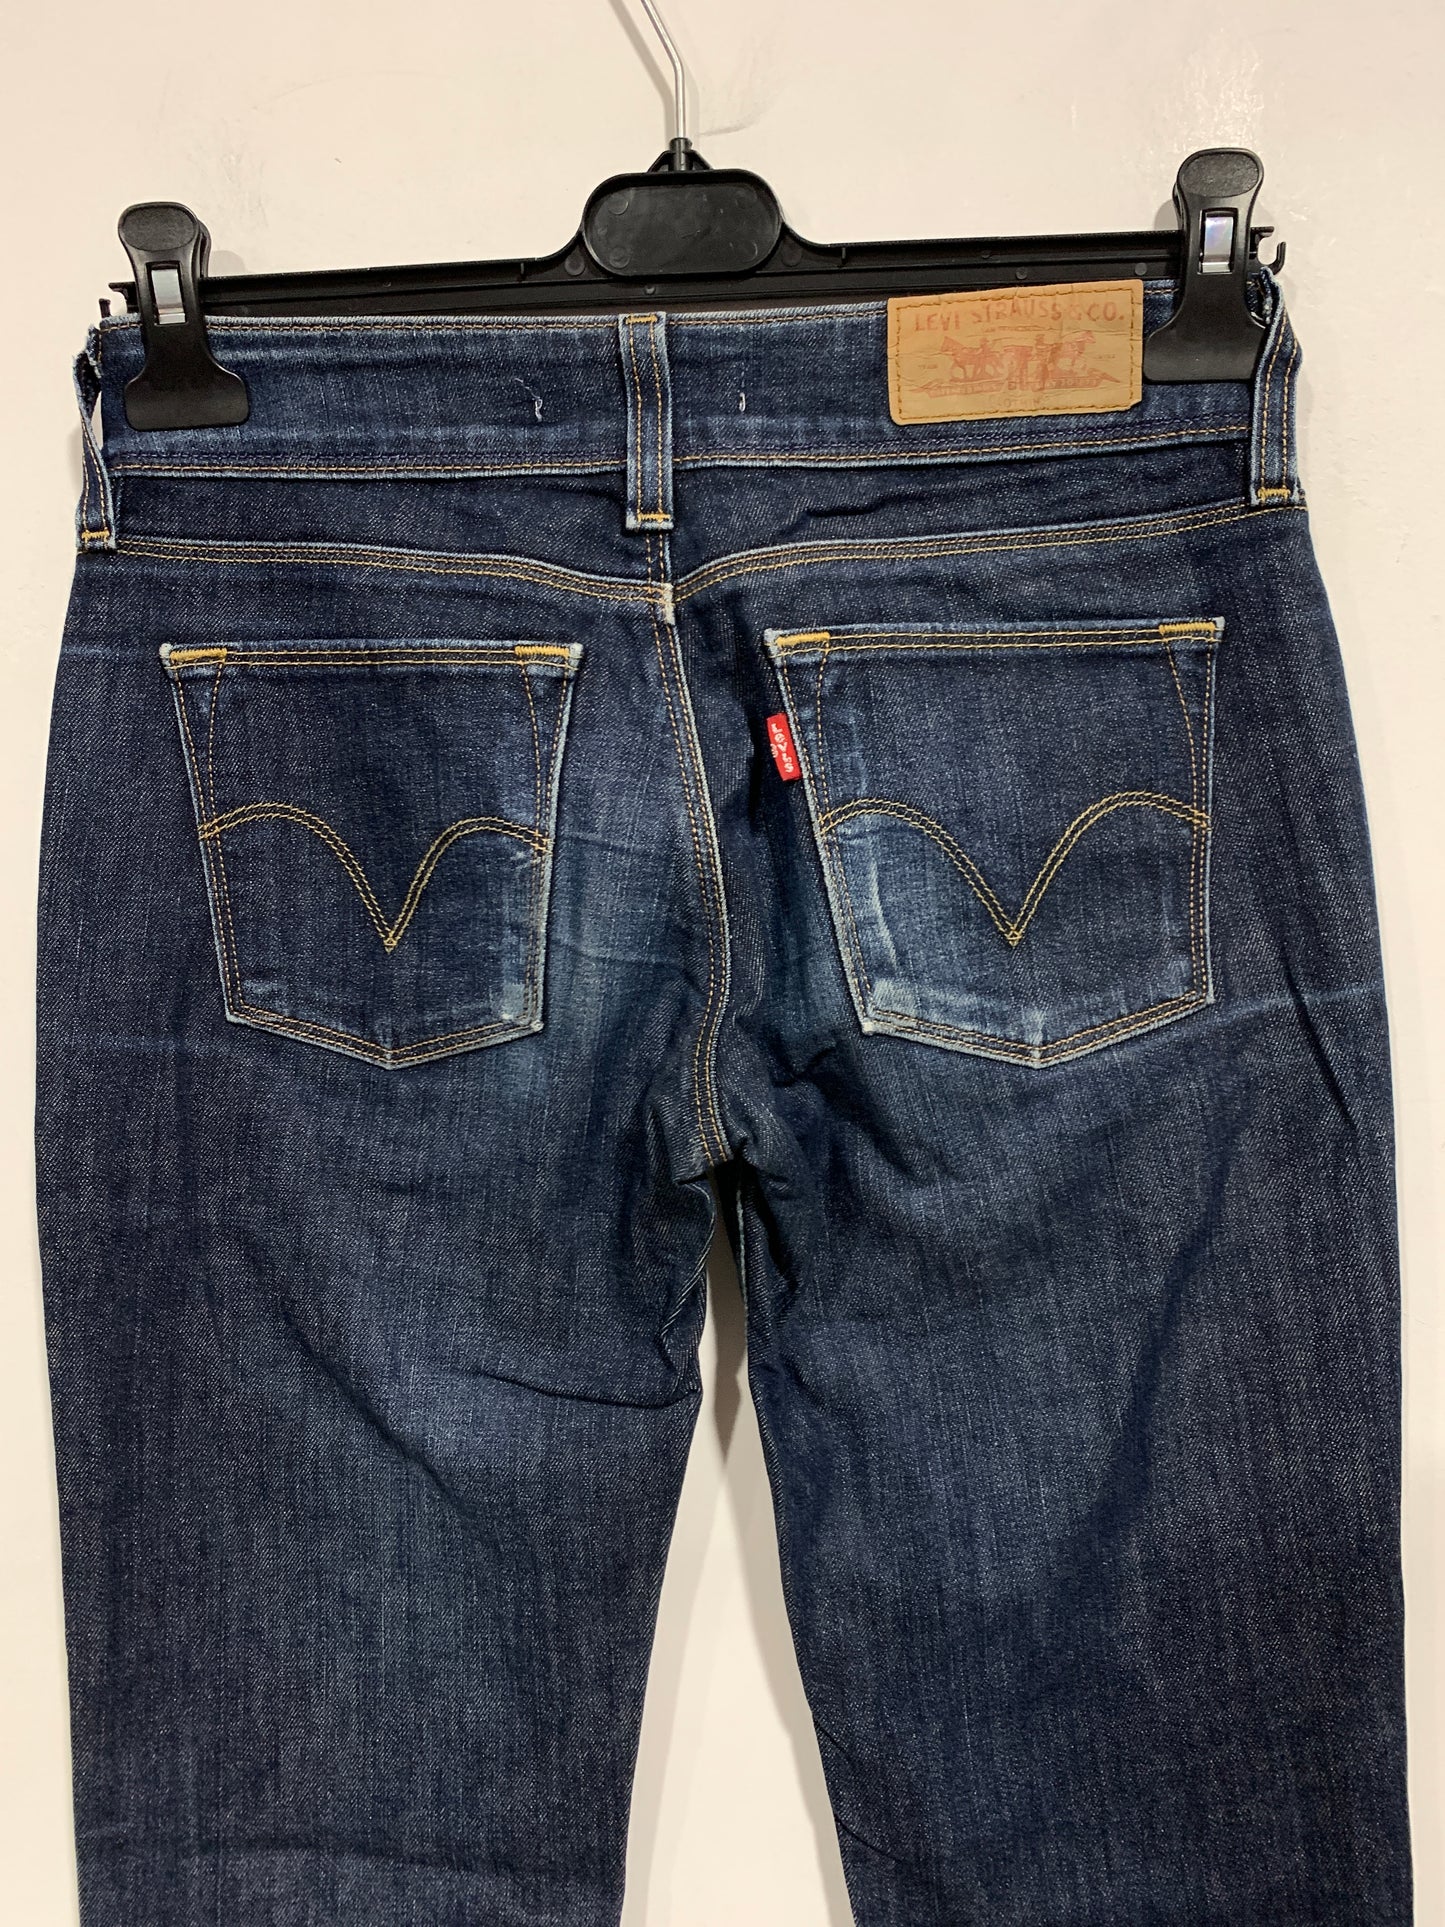 Jeans Levi's 571 slim fit (MR360)